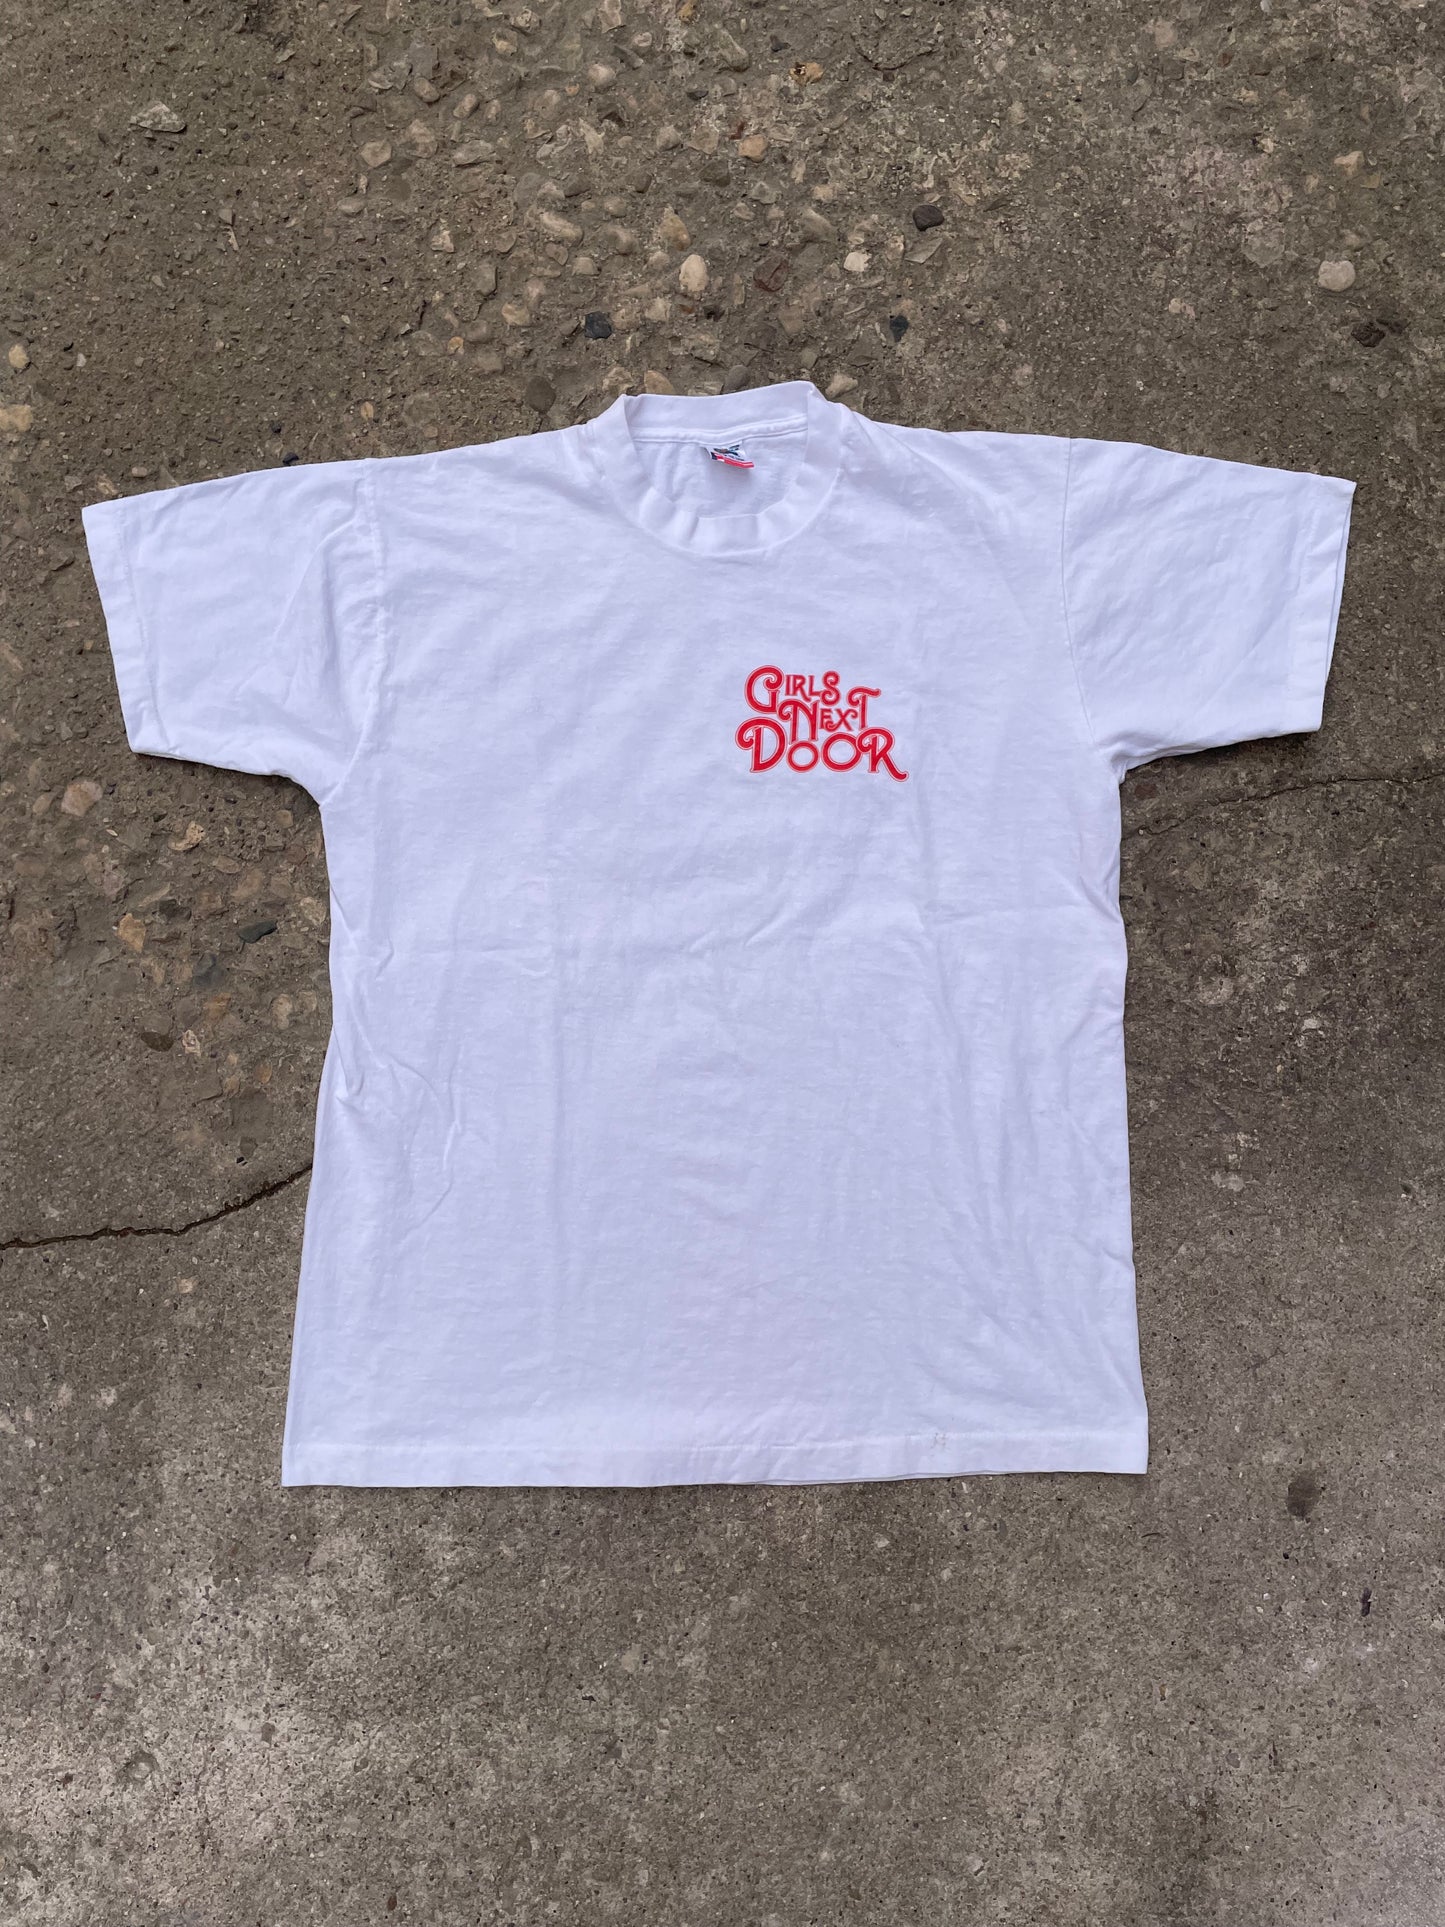 1980's/1990's Girls Next Door Graphic Band T-Shirt - XL